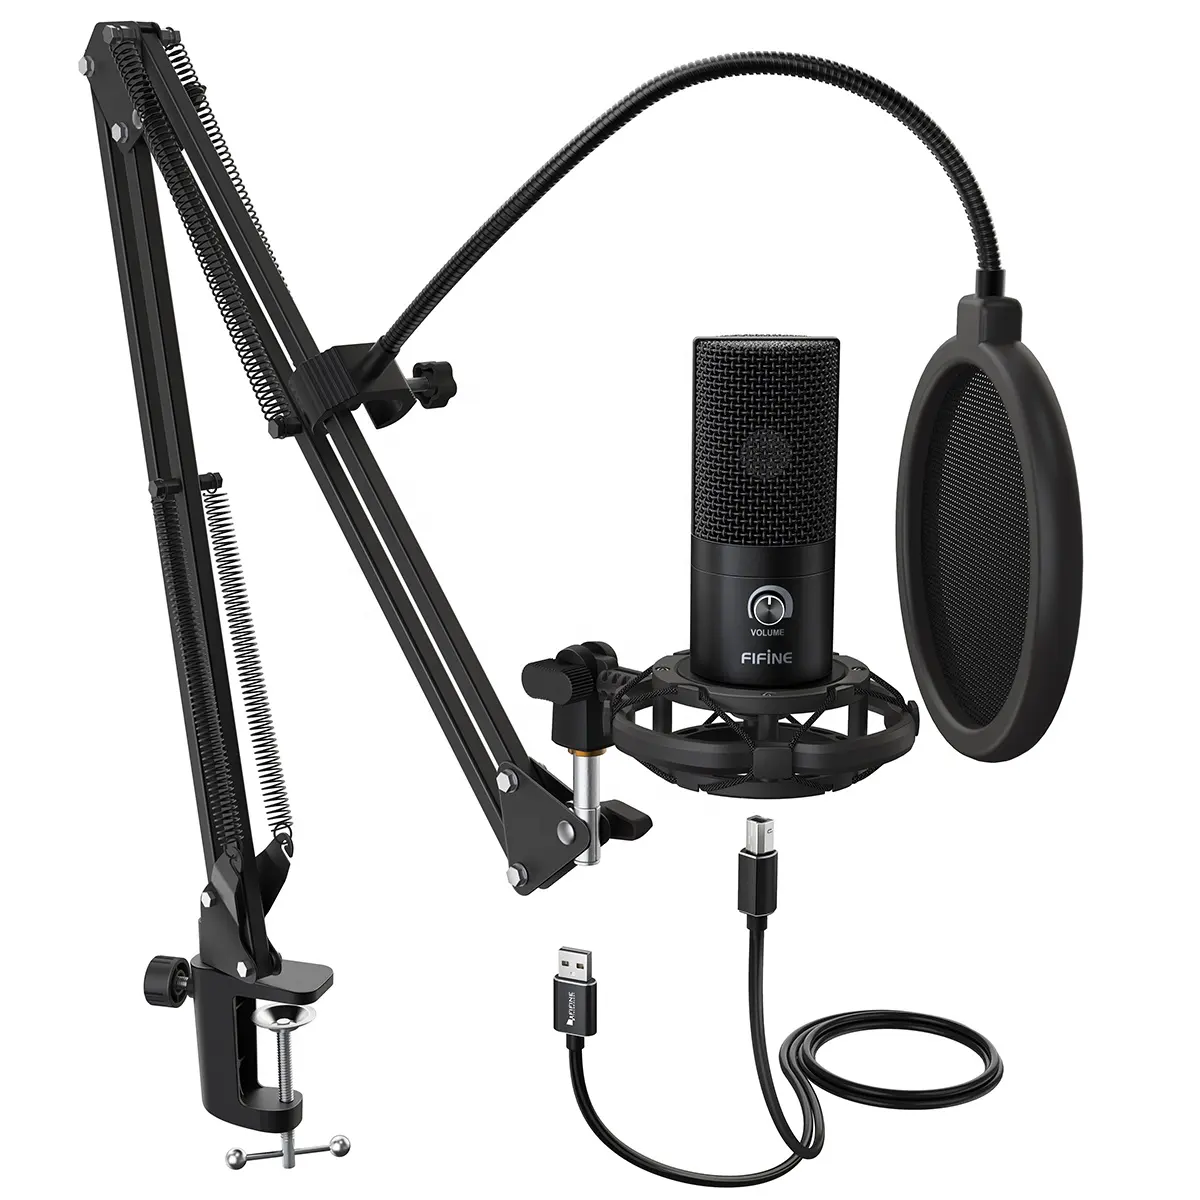 Fifine-micrófono condensador profesional para estudio, micrófonos para grabación y canto, T669, Mikrofon, producto en oferta